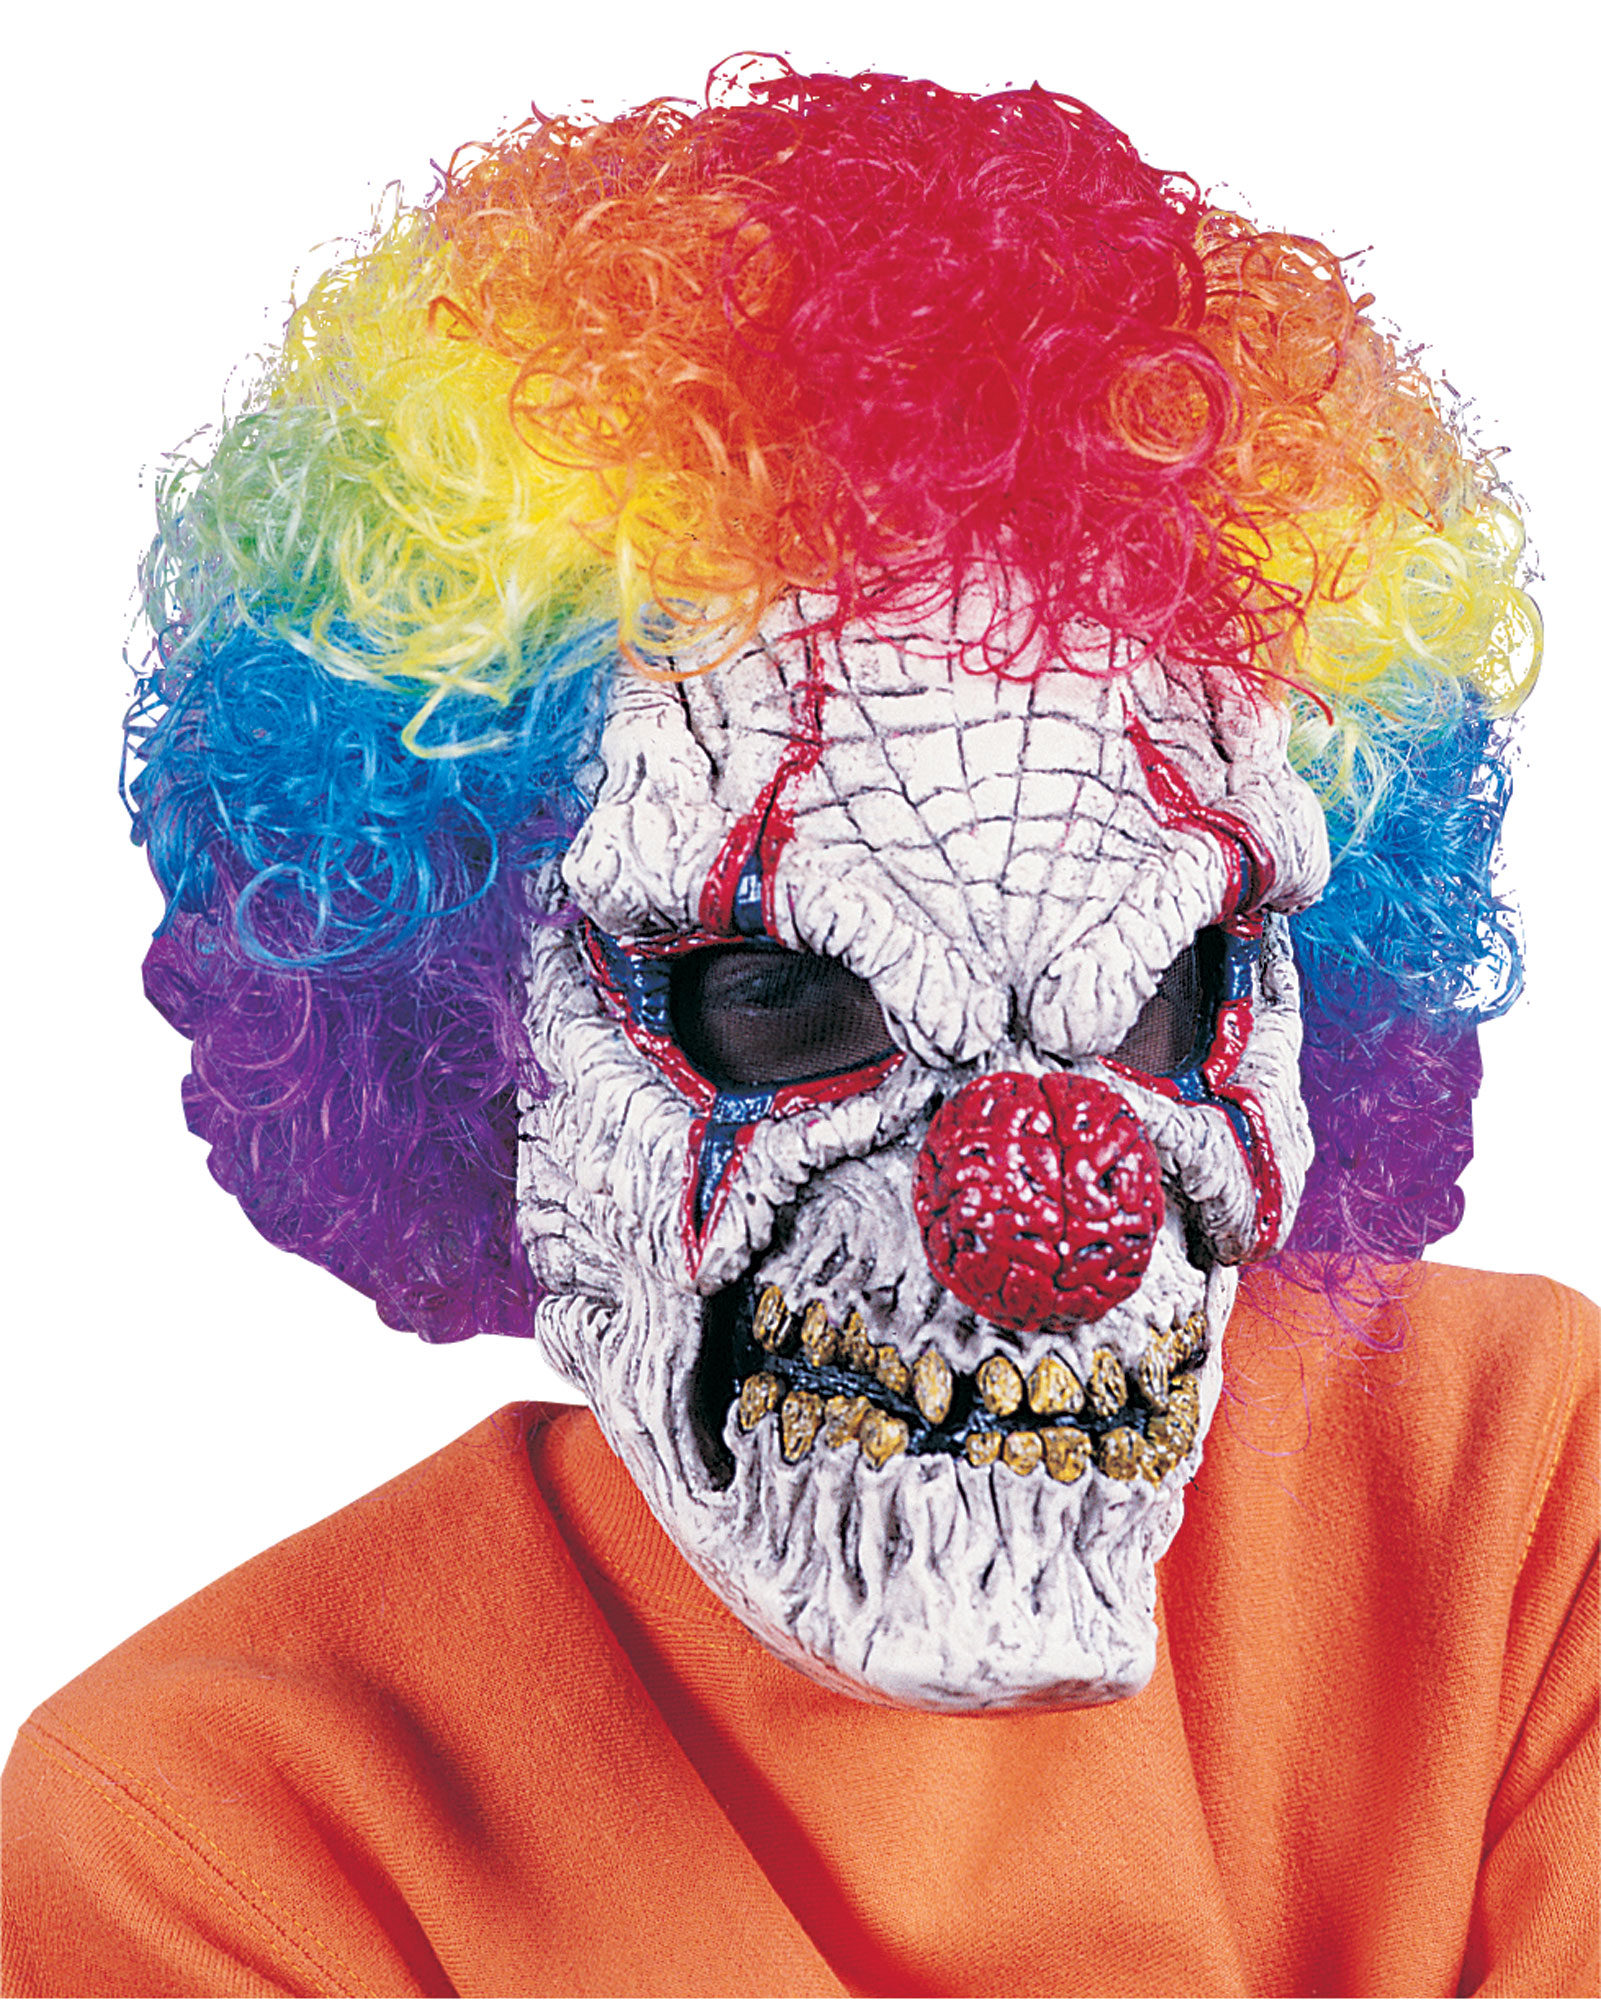 Evil Clown Mask